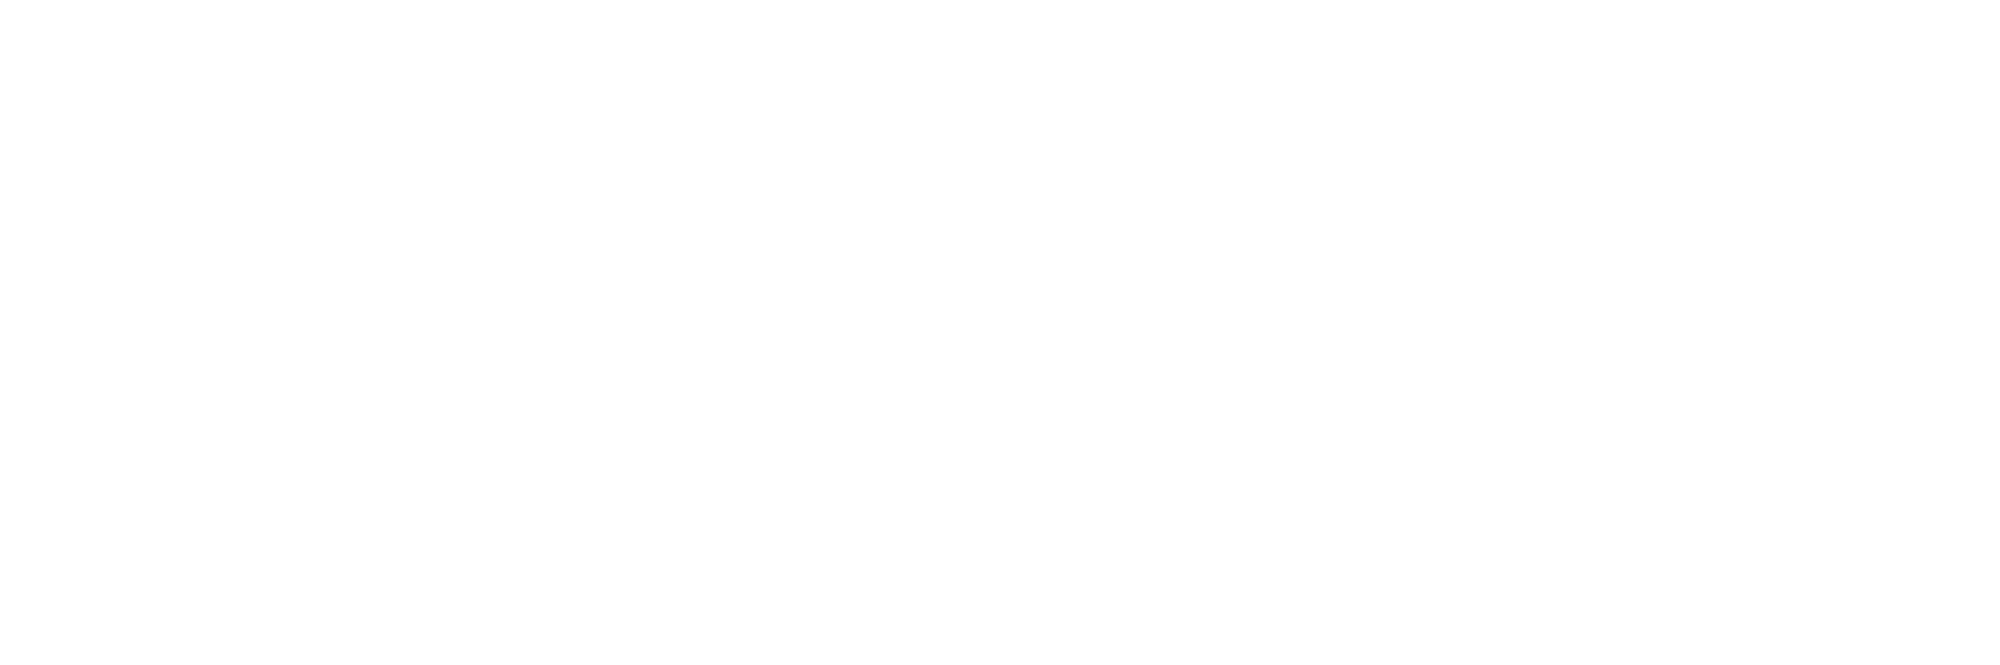 FIFTEEN MINUTES